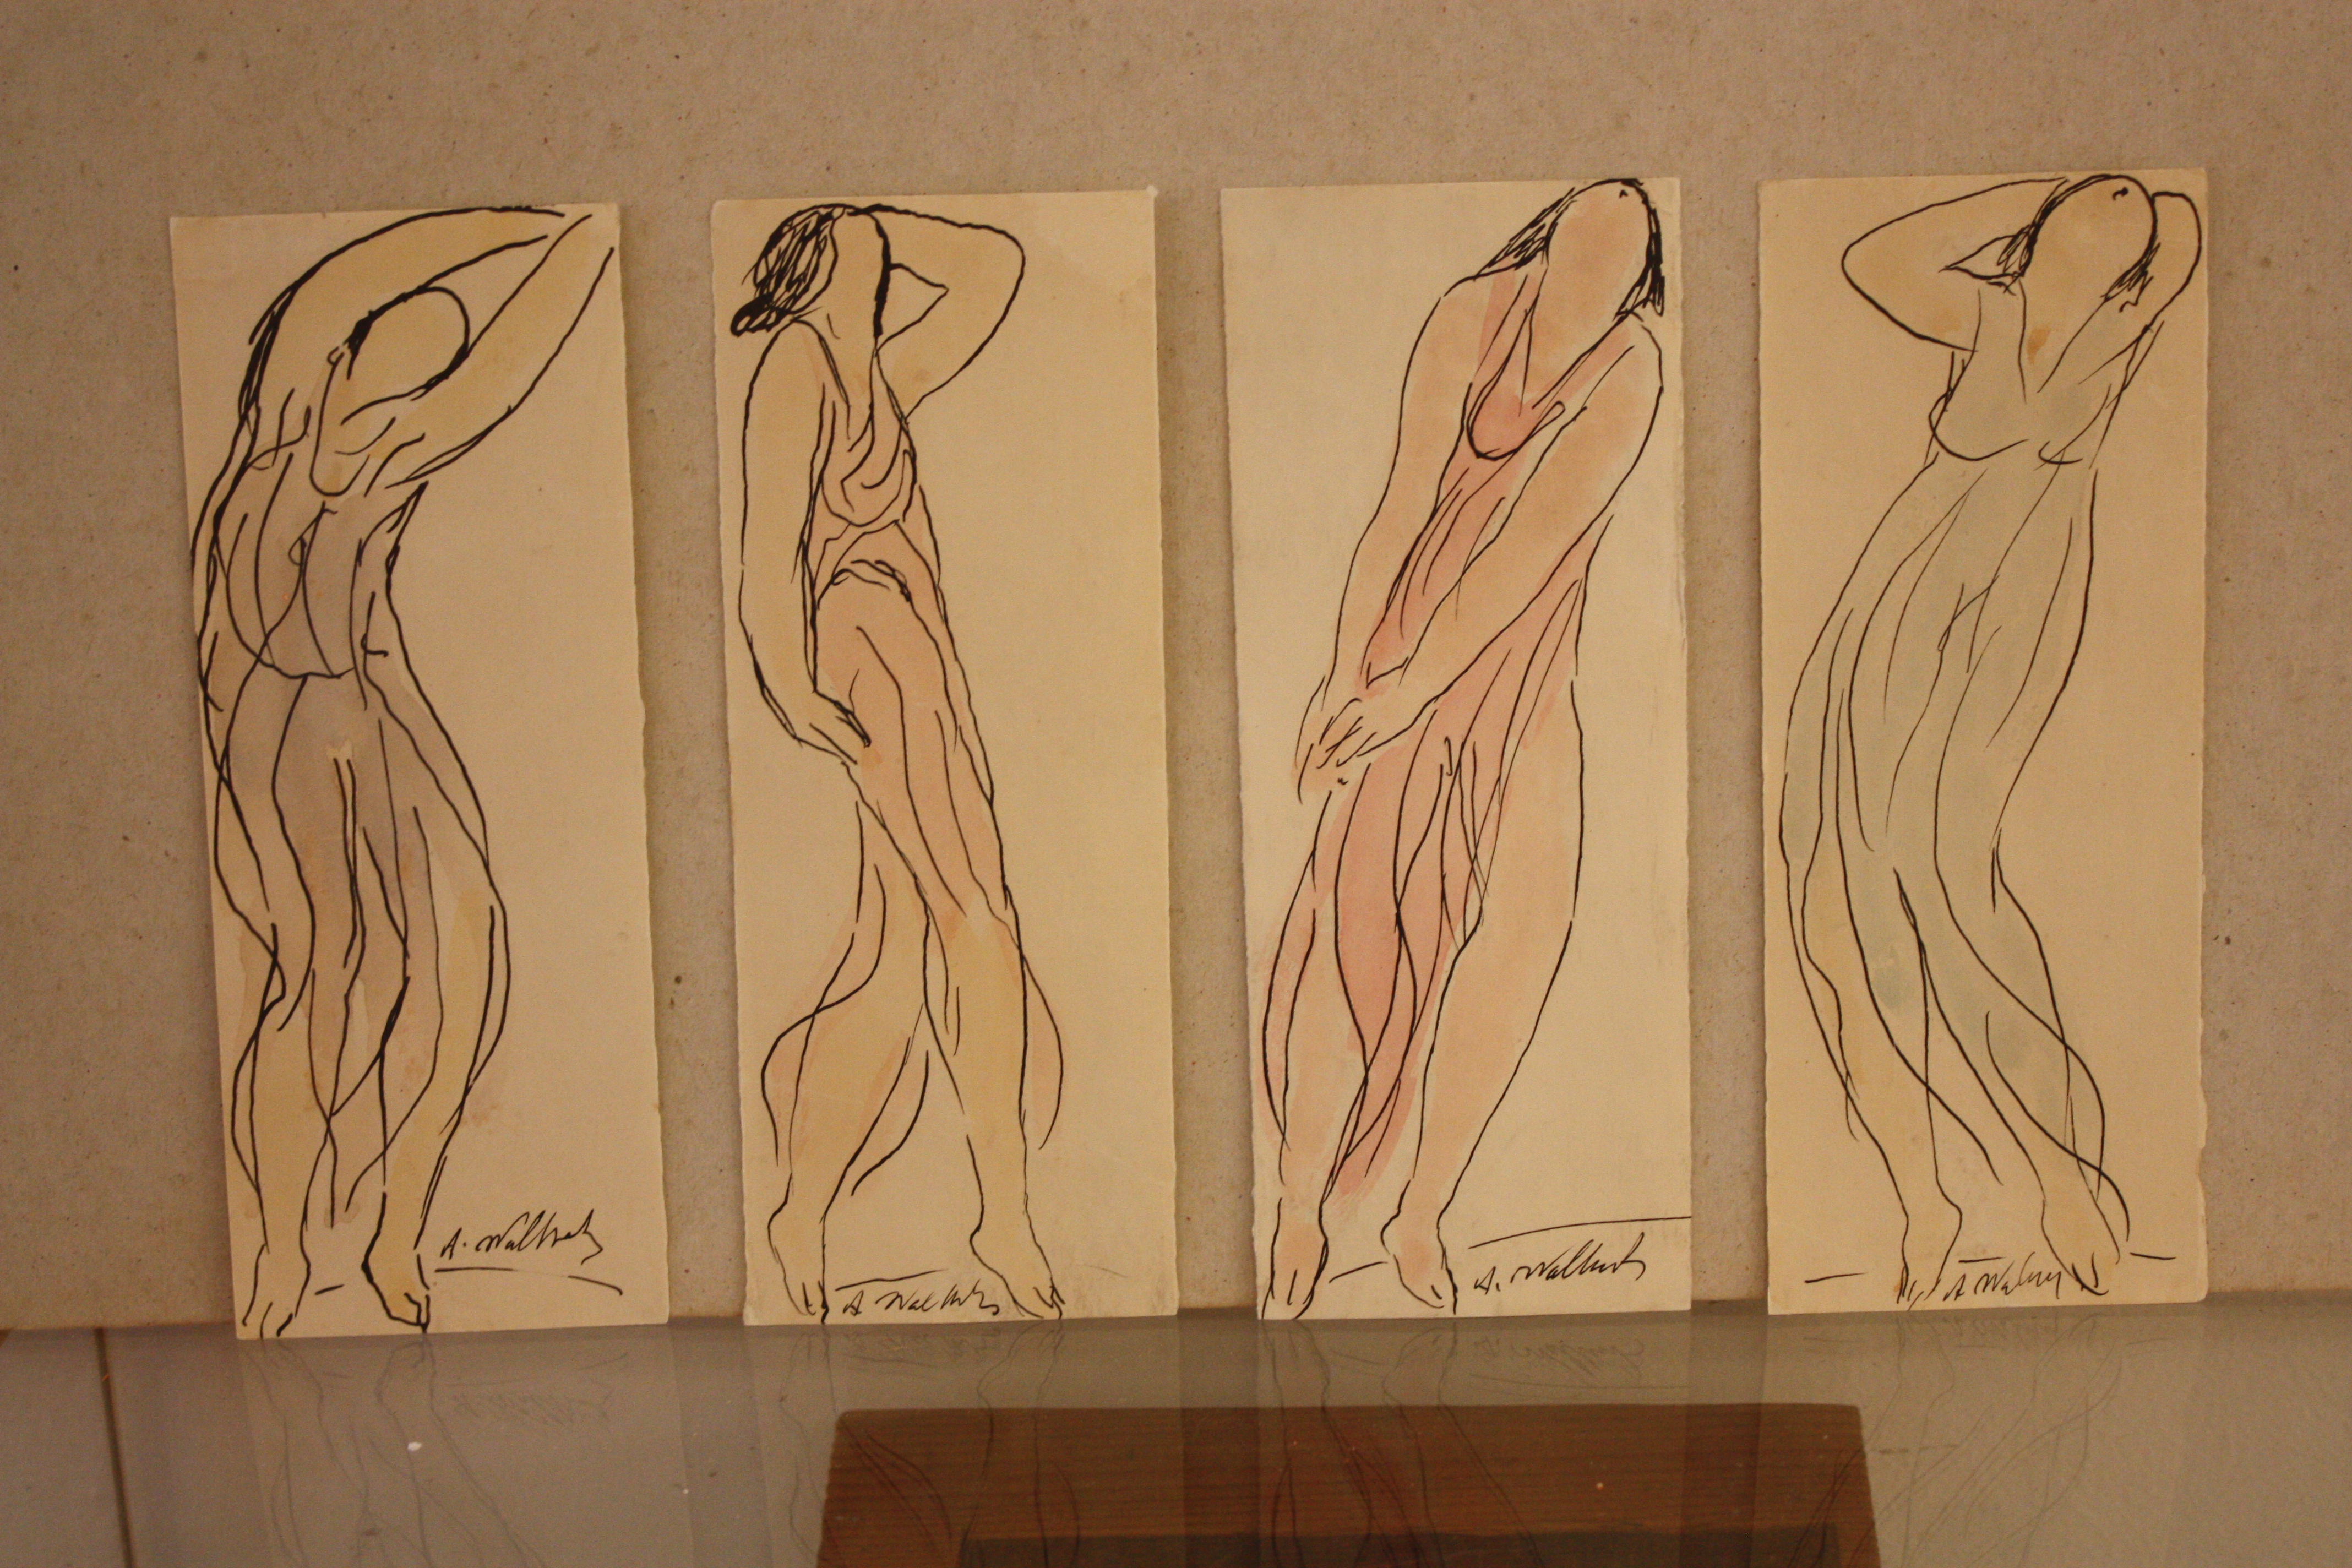 Isadora Duncan by Abraham Walkowitz